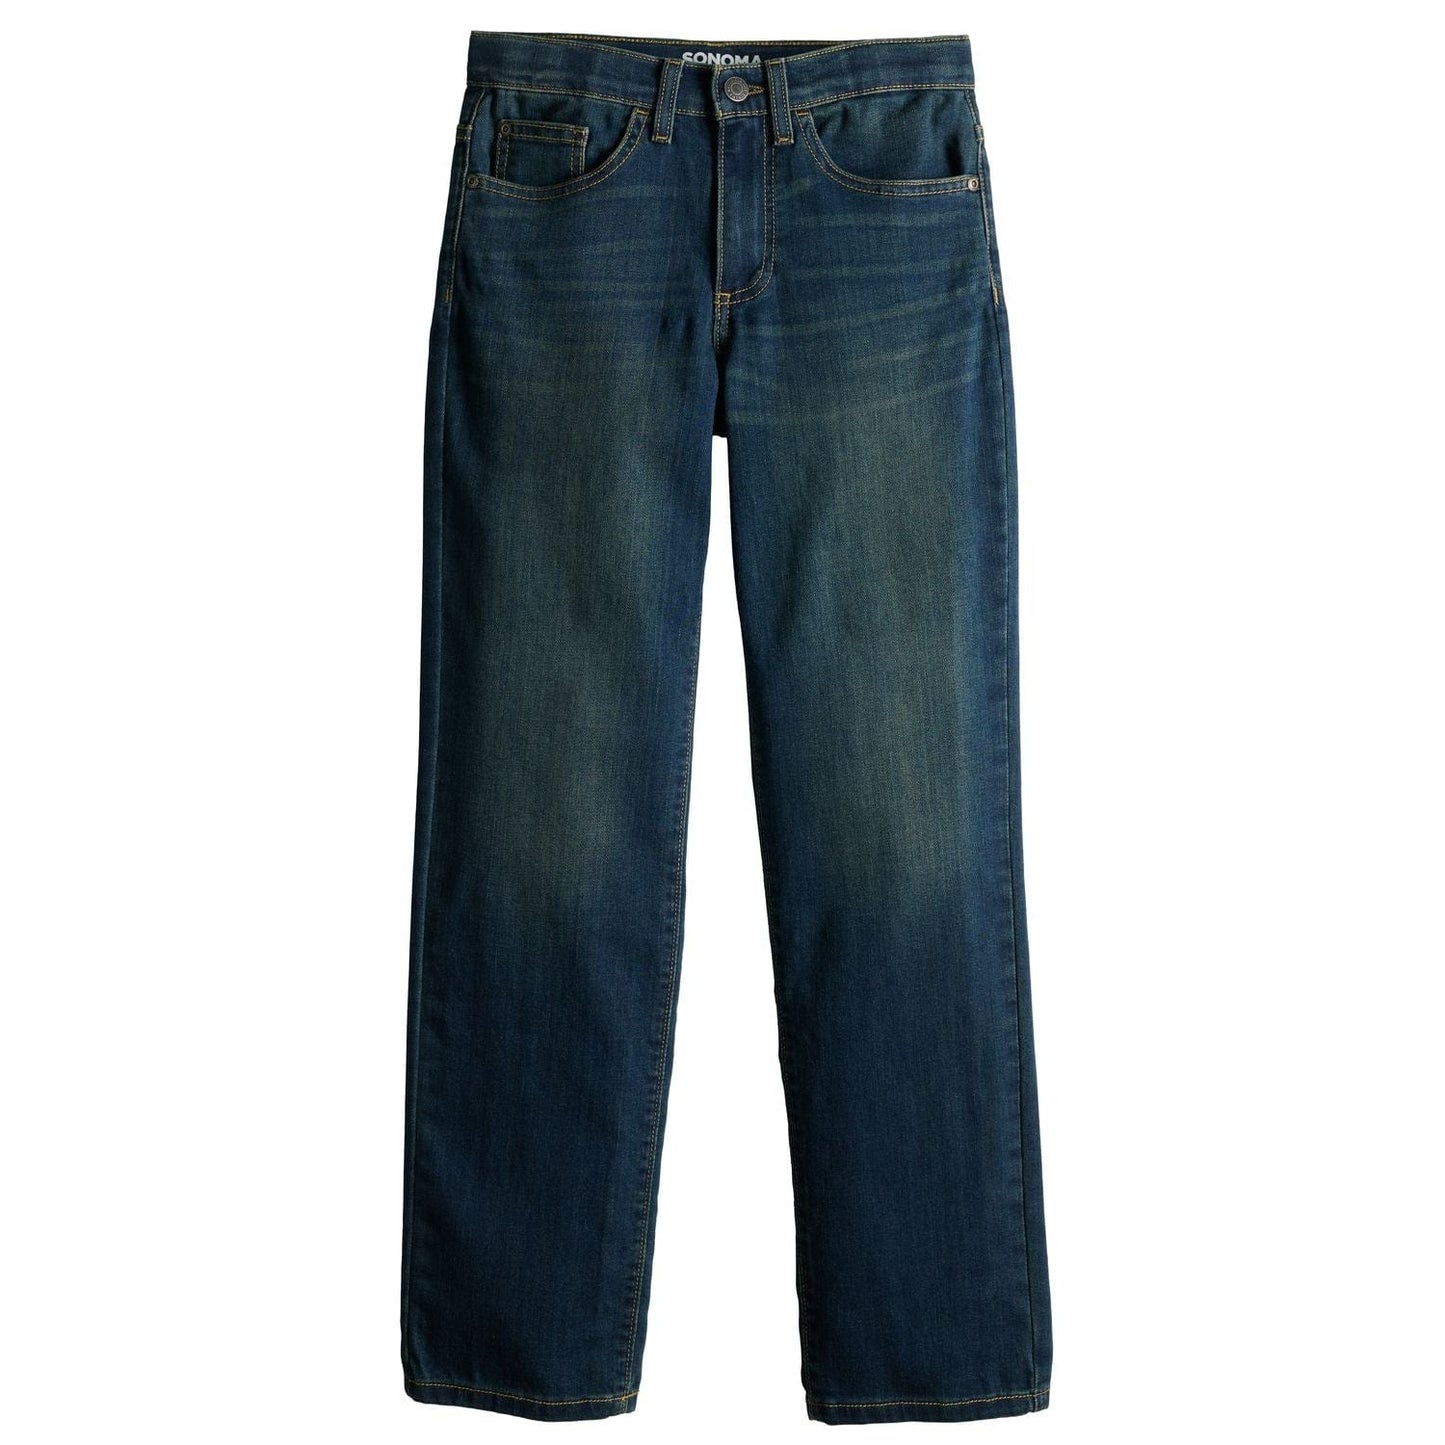 Boys 7-20 Flex-wear Straight Jeans in Regular, Slim & Husky - CLASSY CLOSET BOUTIQUEBoys 7-20 Flex-wear Straight Jeans in Regular, Slim & Huskyjeans4986116Jade Indigo7 SLIM